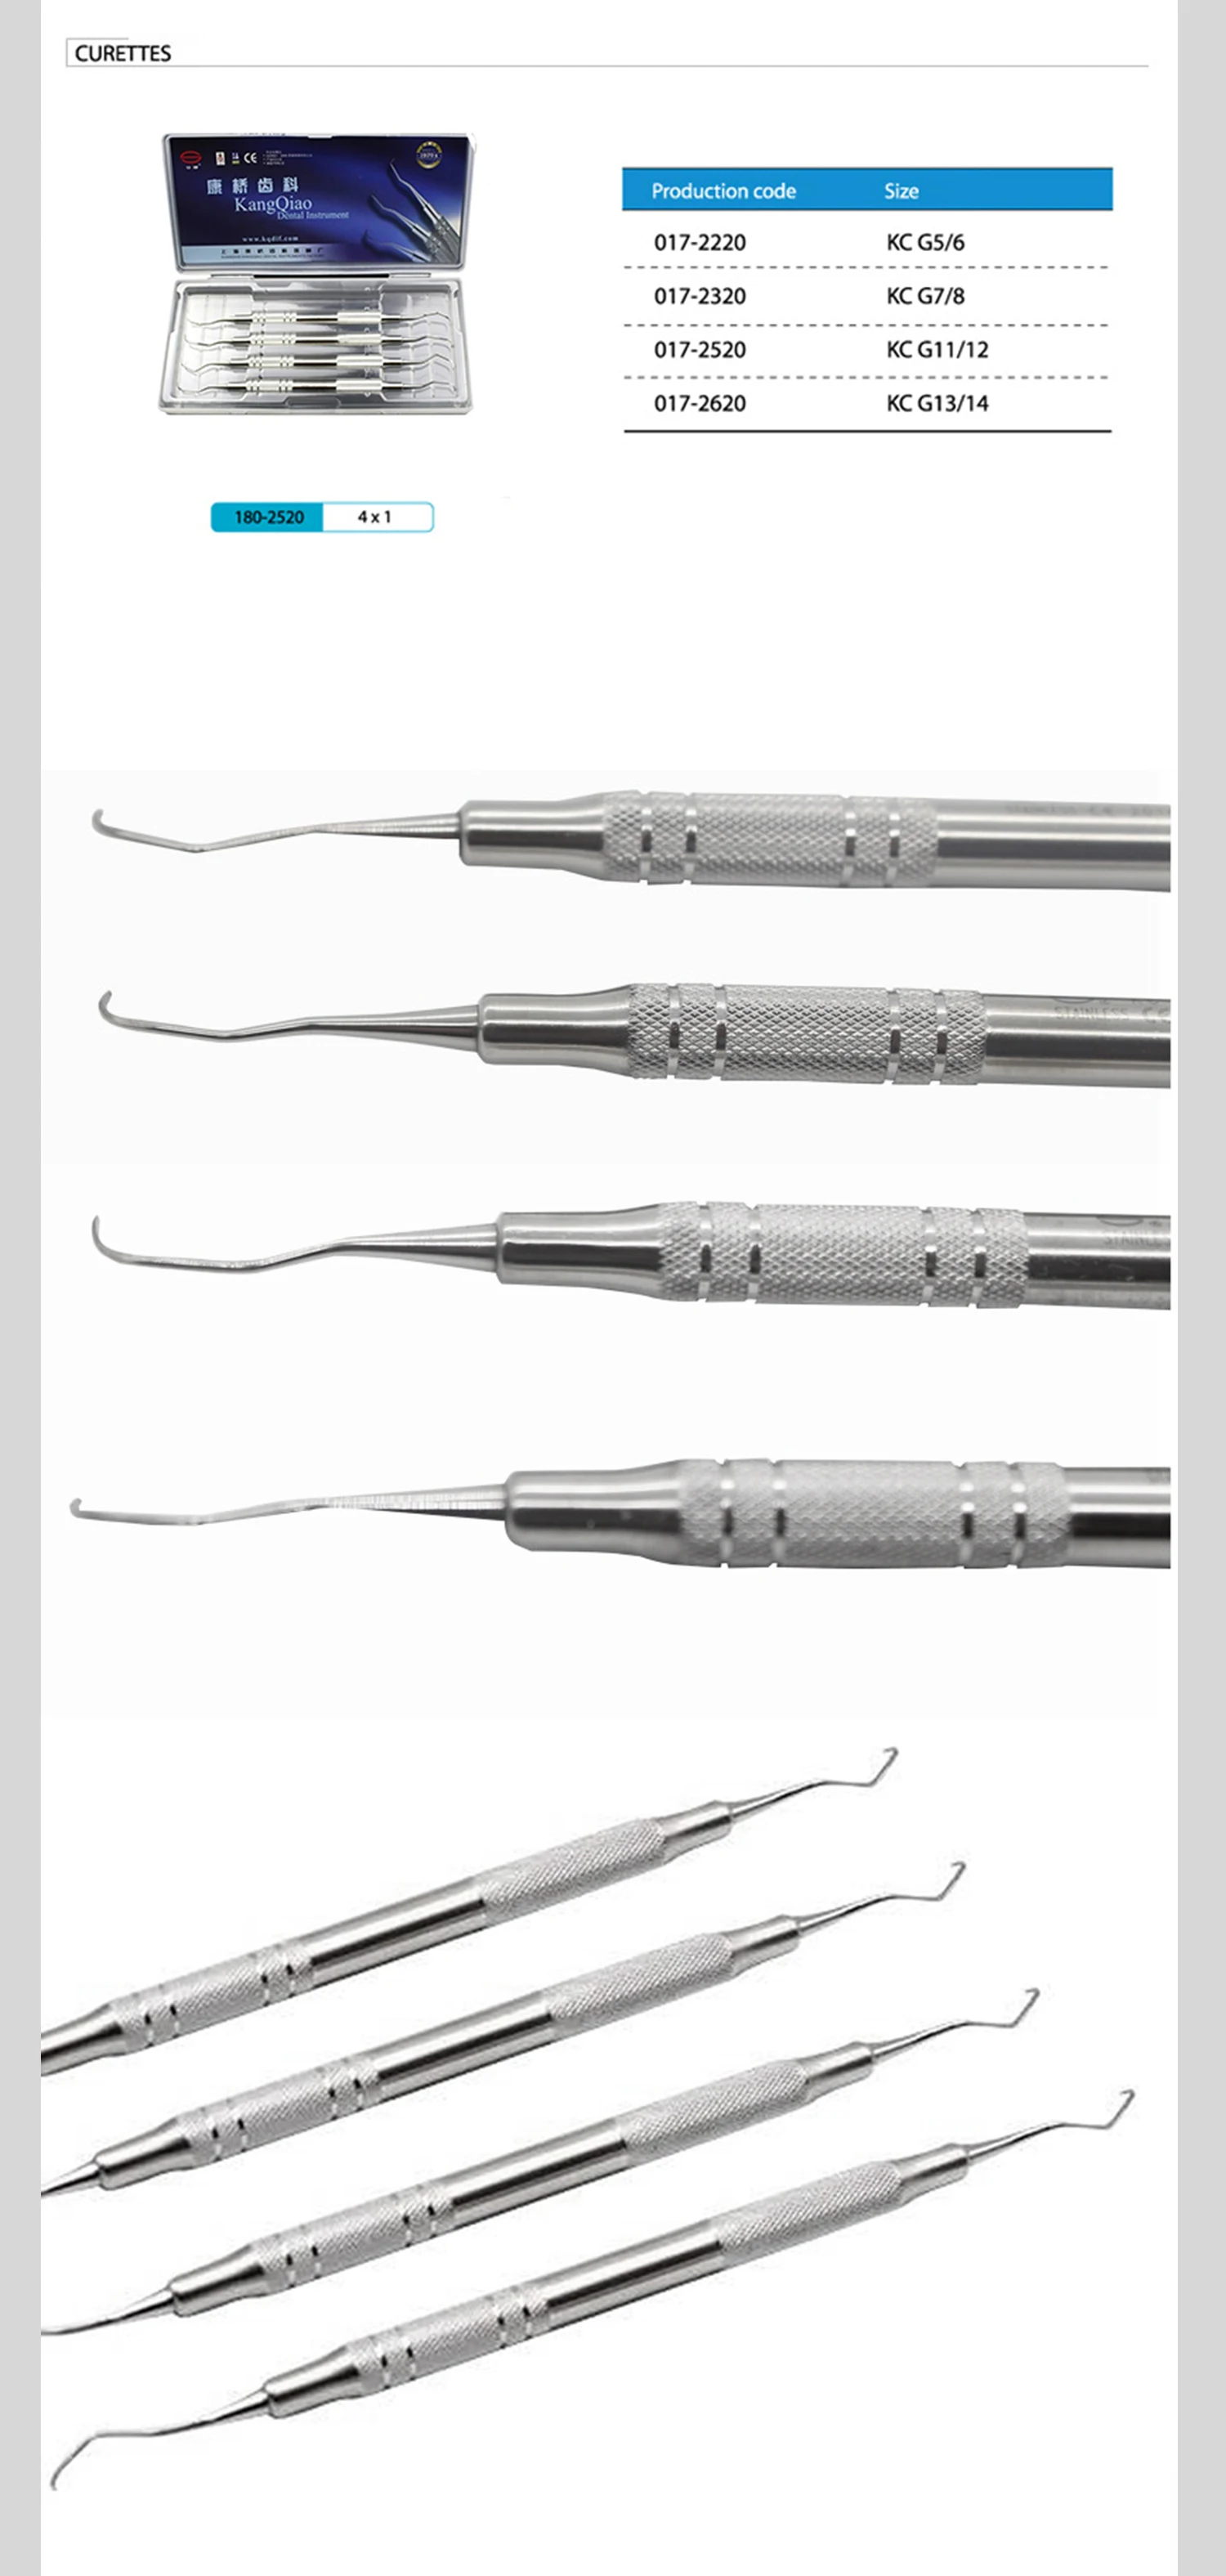 Lanpai-Subgengival Instrumento Periodontal Dental, Cureta Artesanal, 4x1